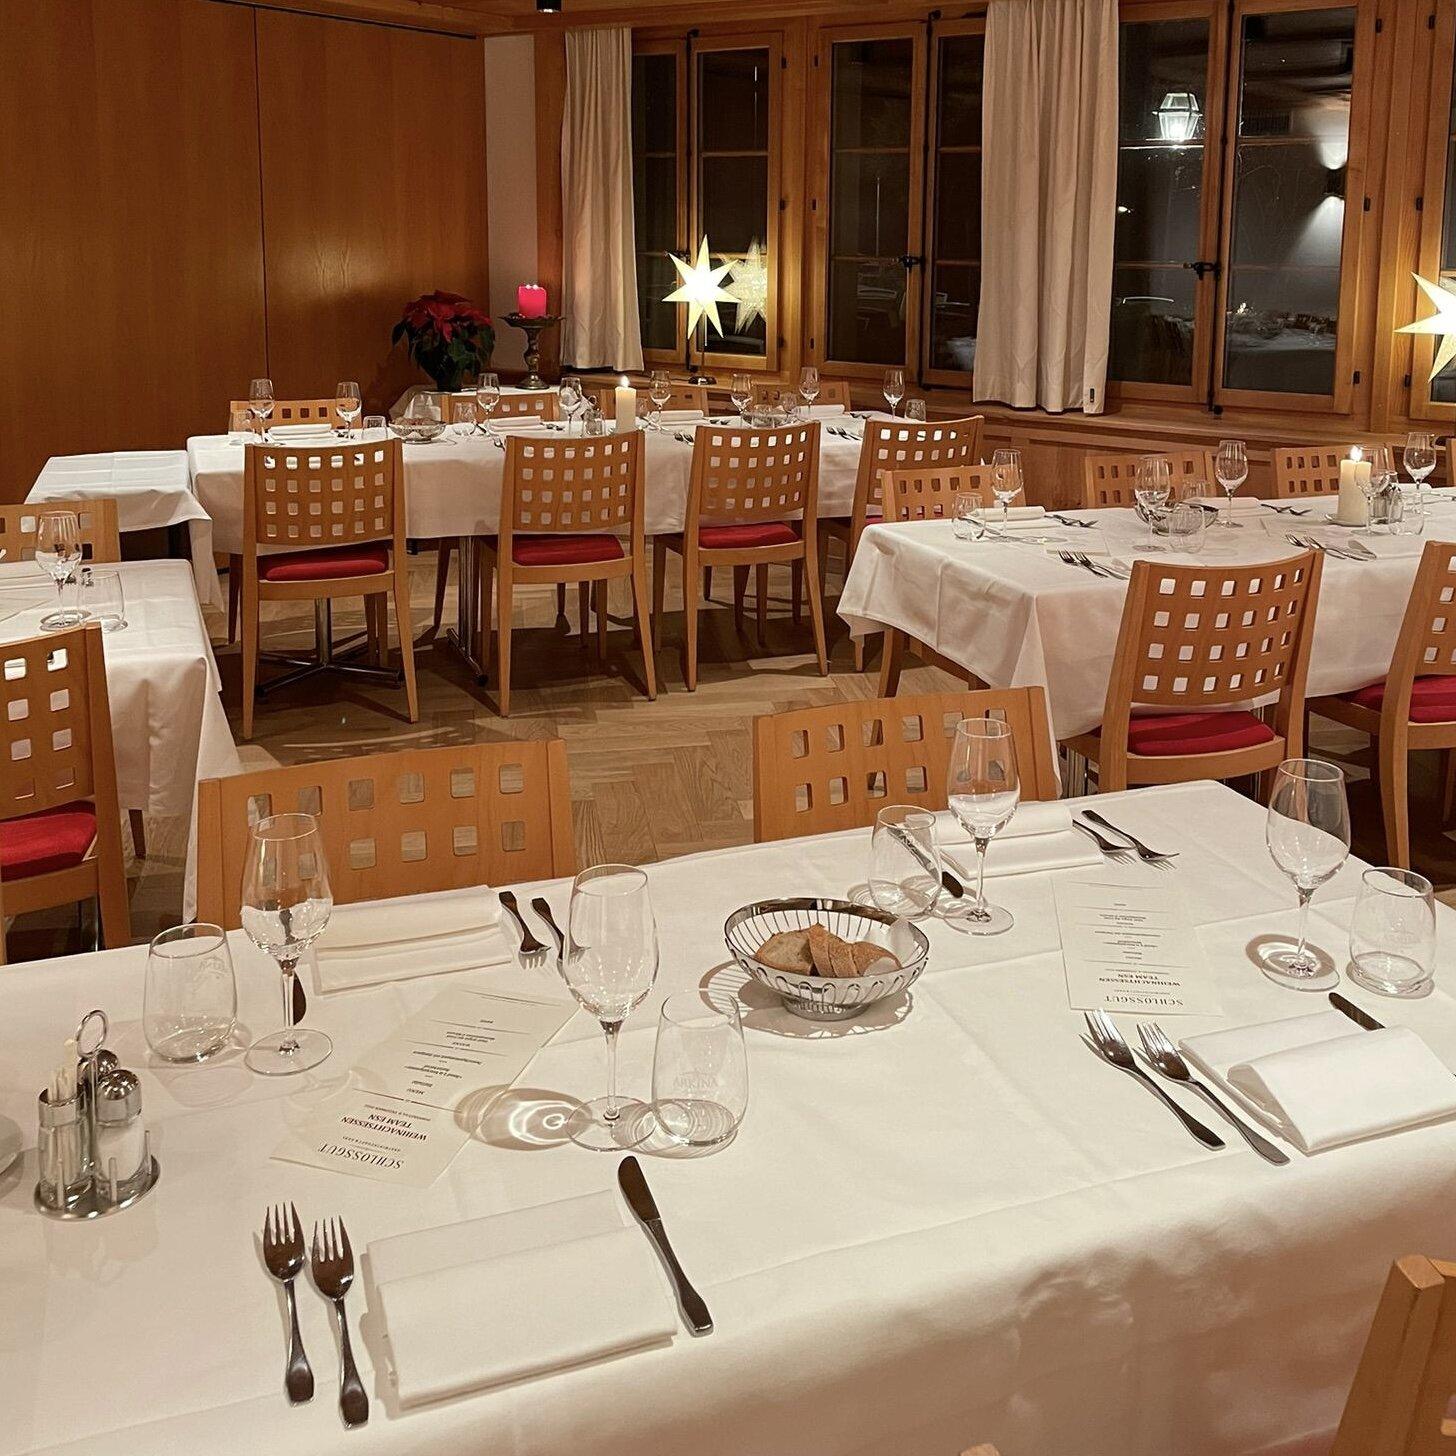 Restaurant "Schlossgut" in Münsingen